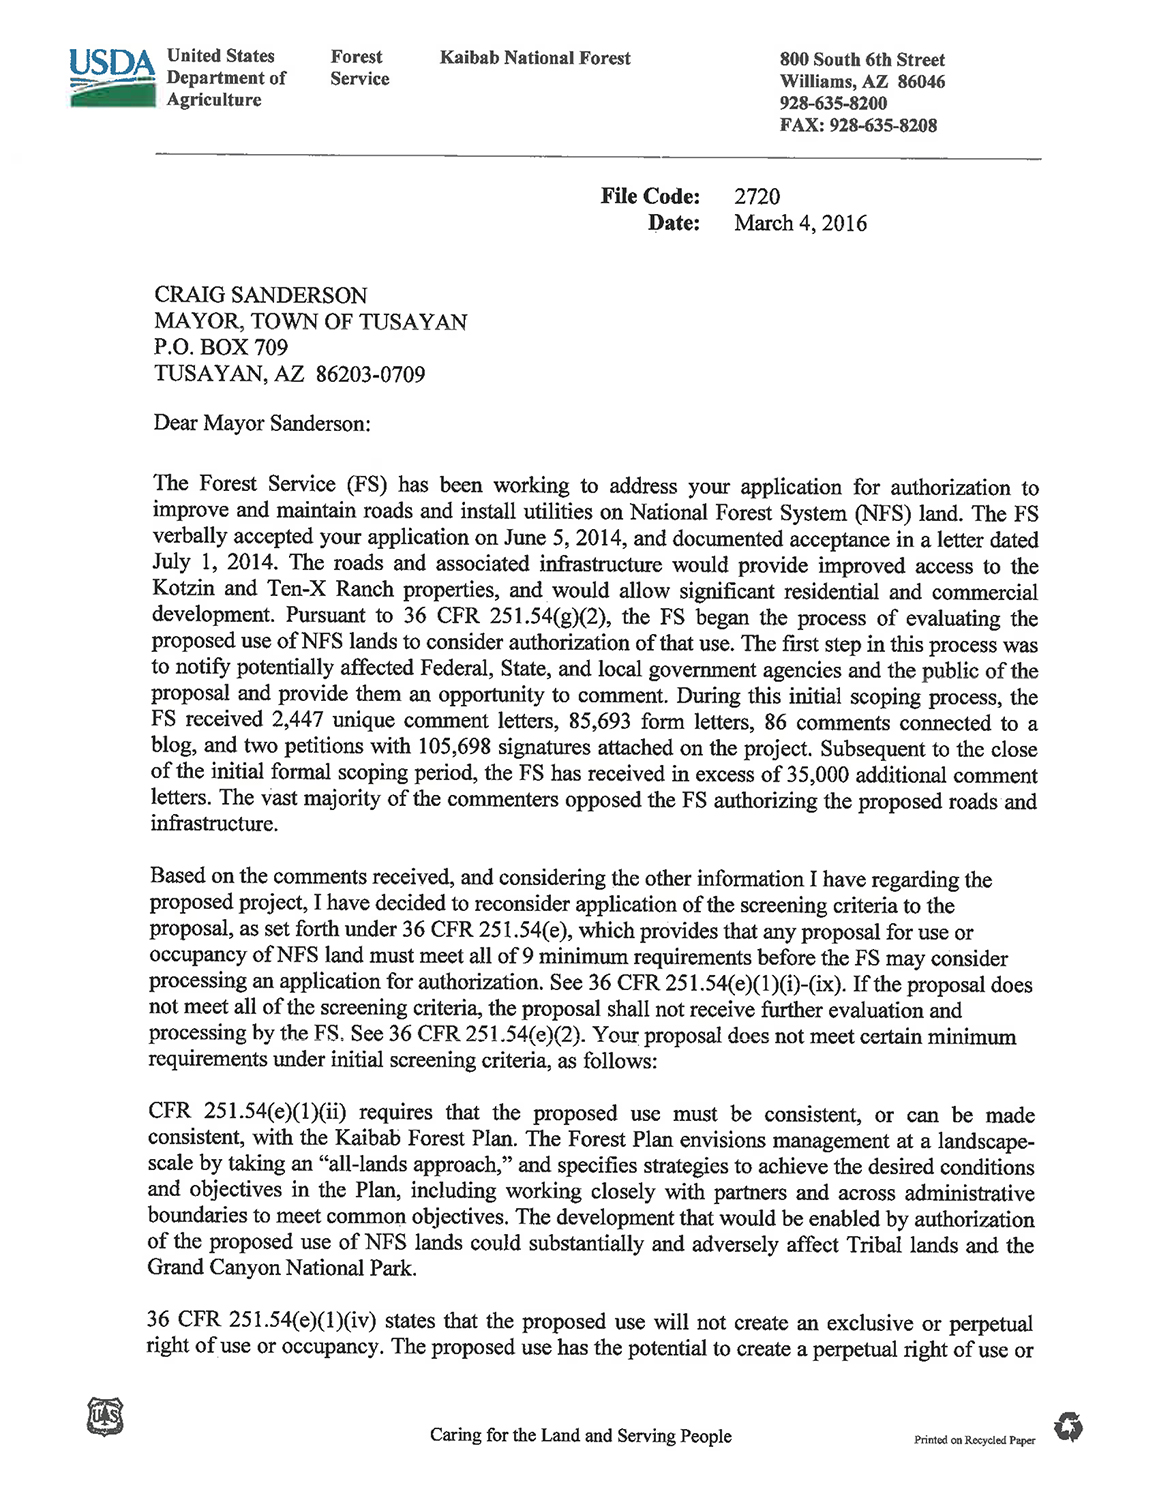 Letter to Tusayan regarding road easement